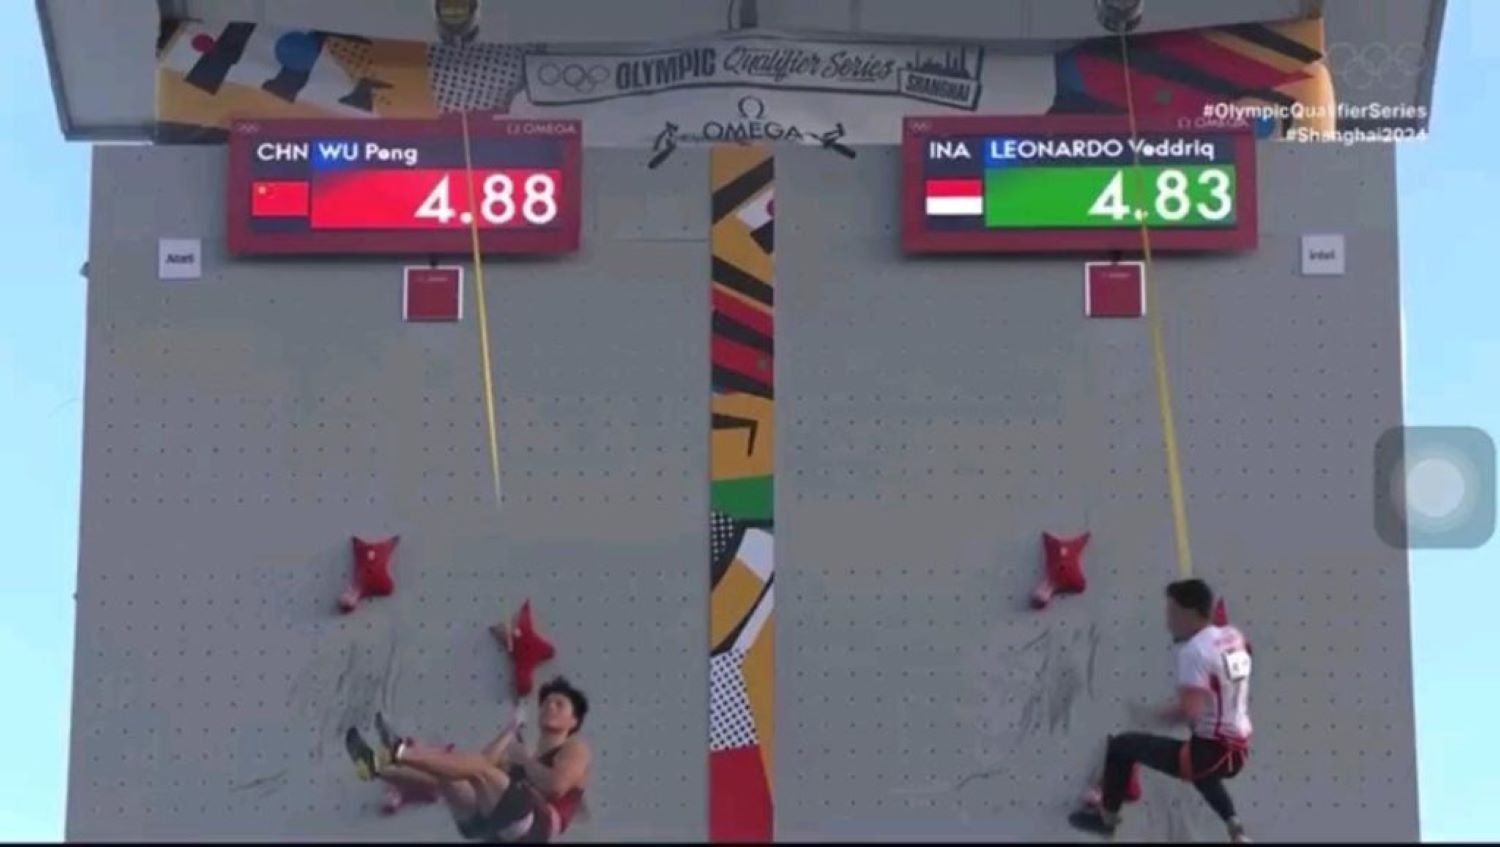 Veddriq dengan catatan 4,83 detik menang di partai final dari atlet panjat tebing nomor satu dunia asal Cina Peng Wu yang catatkan 4,88 detik